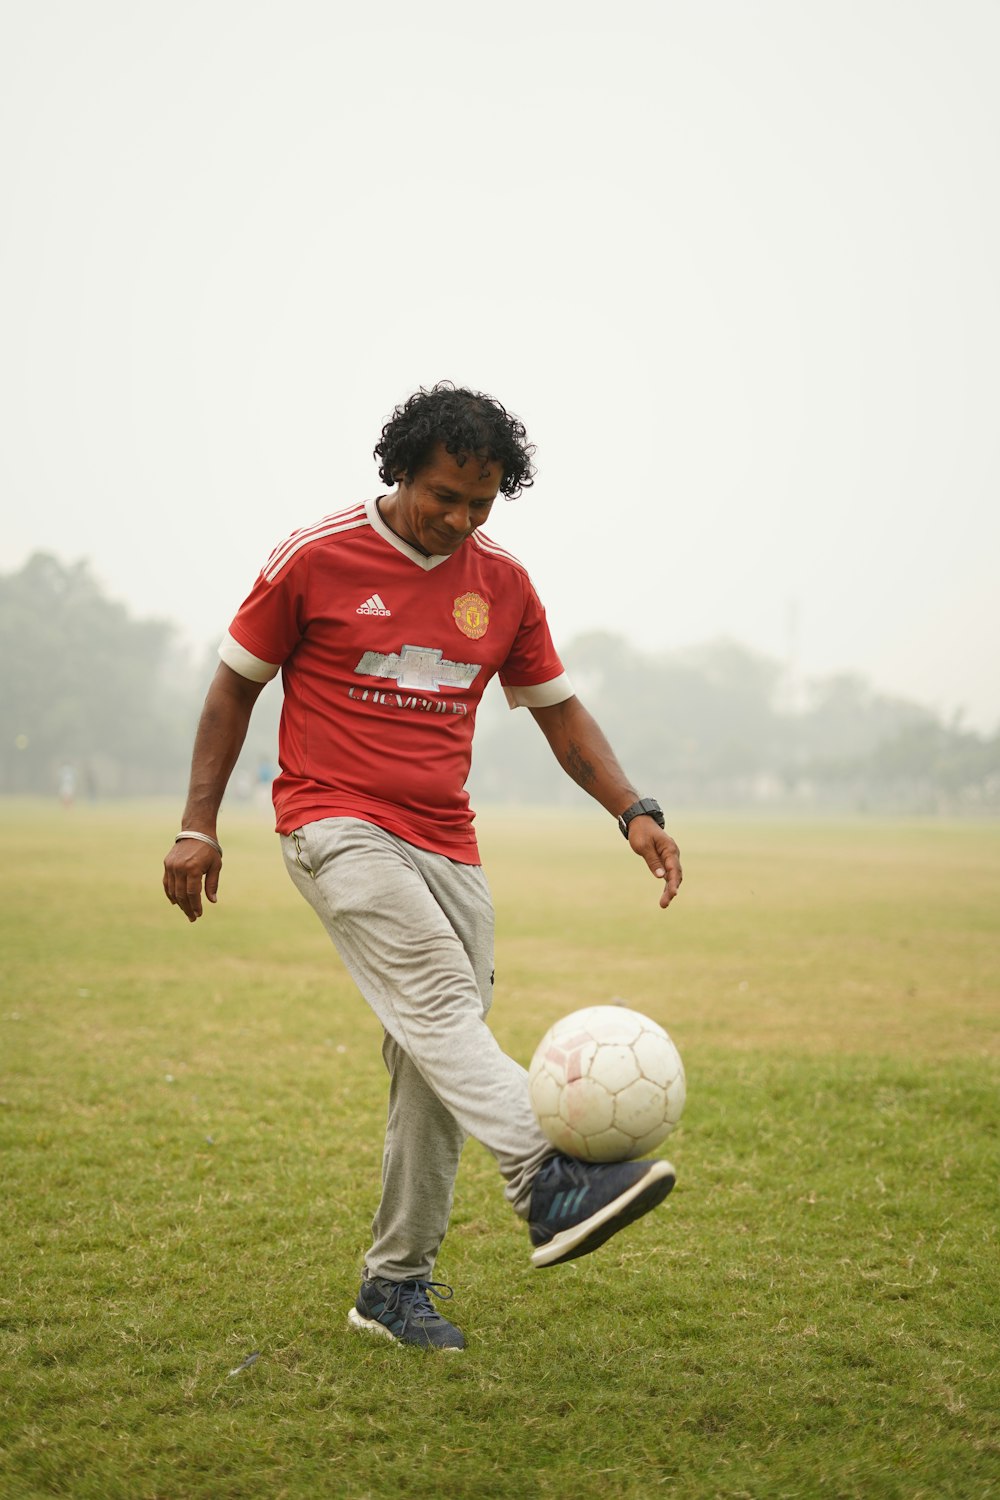 Mann im rot-weißen Fußballtrikot kickt tagsüber Fußball auf grünem Rasen